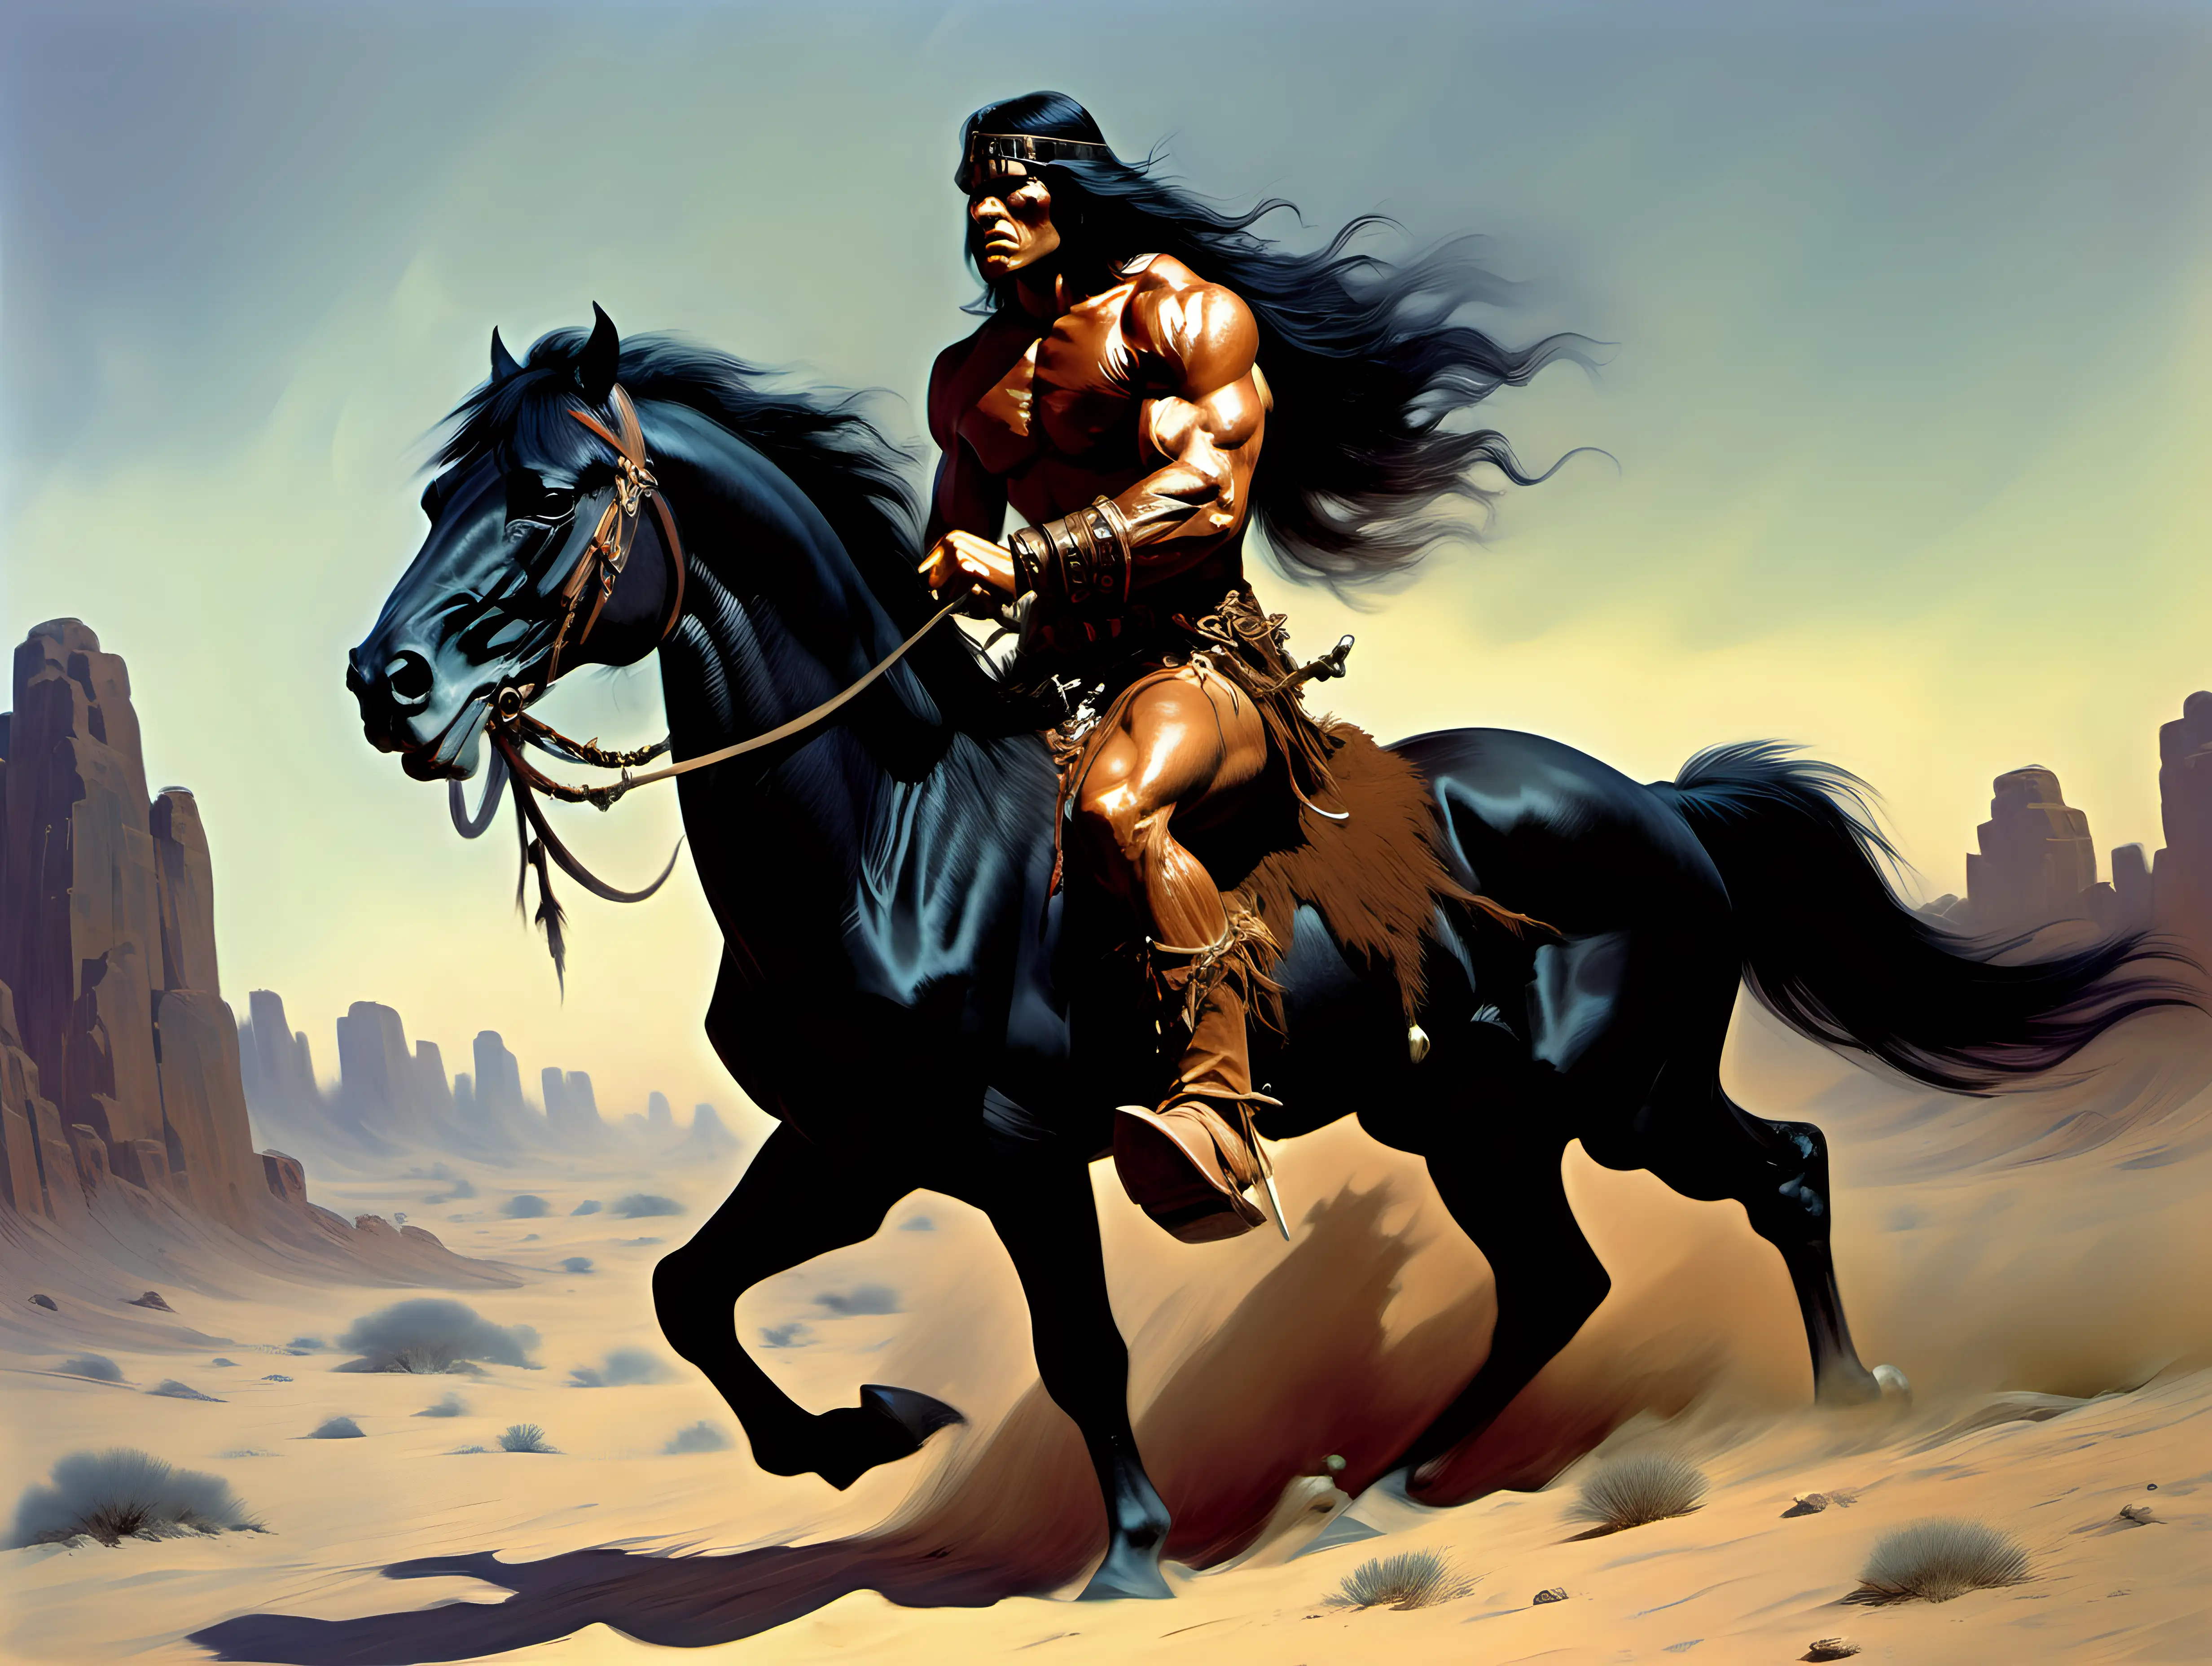 Conan the Barbarian Riding Black Arabian Horse in Desert Fantasy Art